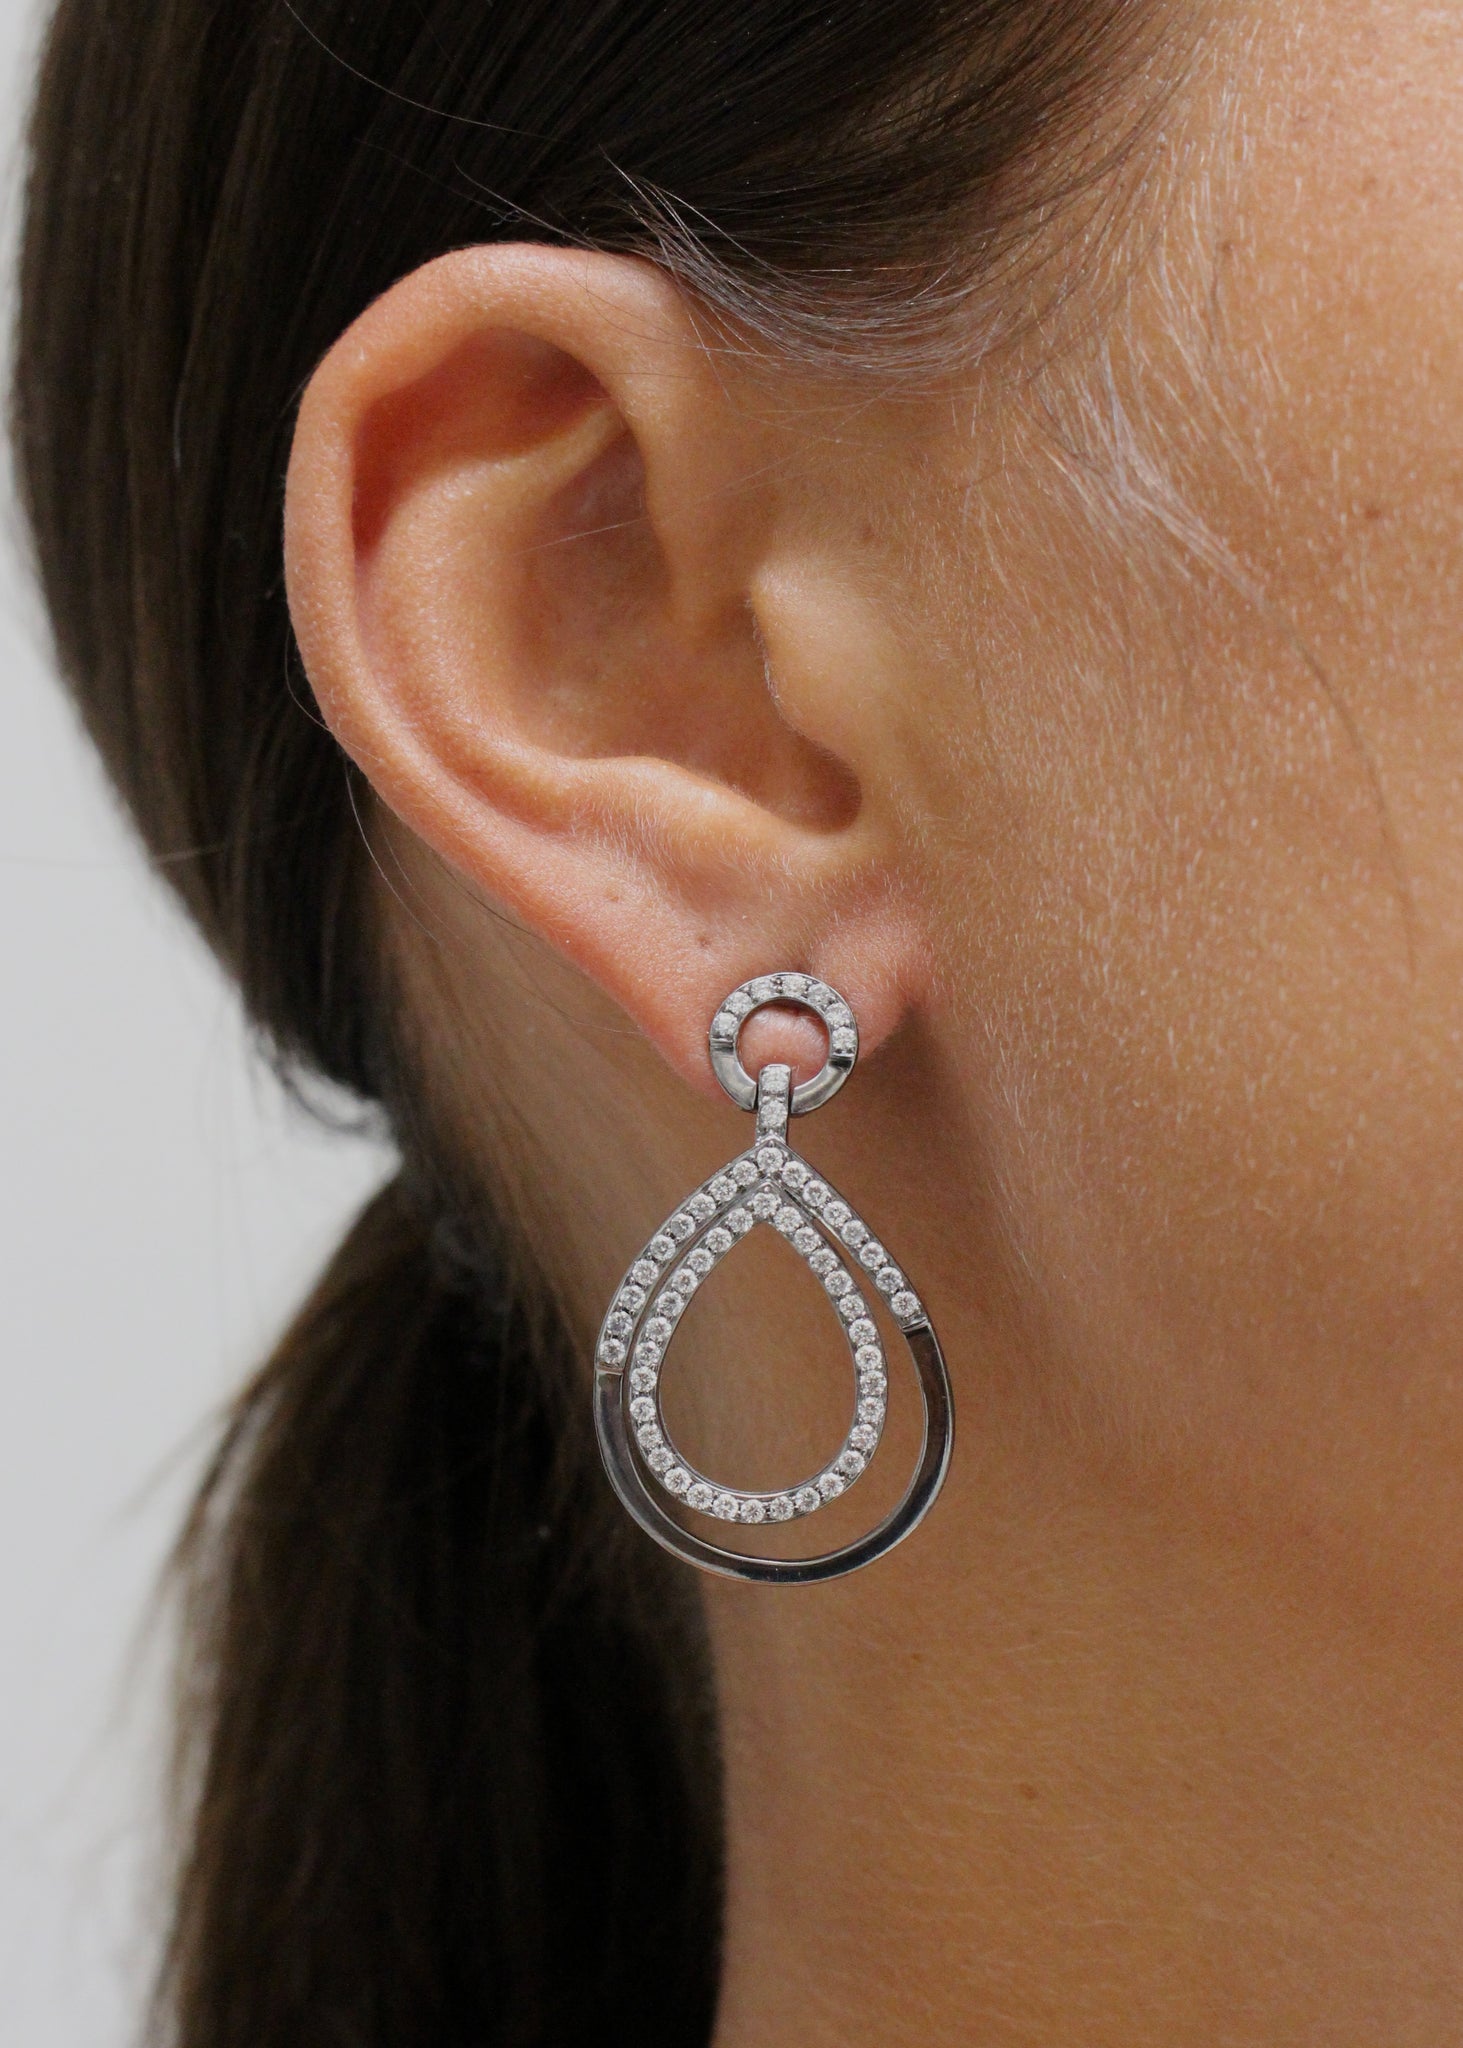 18 krt white gold earrings set with 112 brilliant diamonds